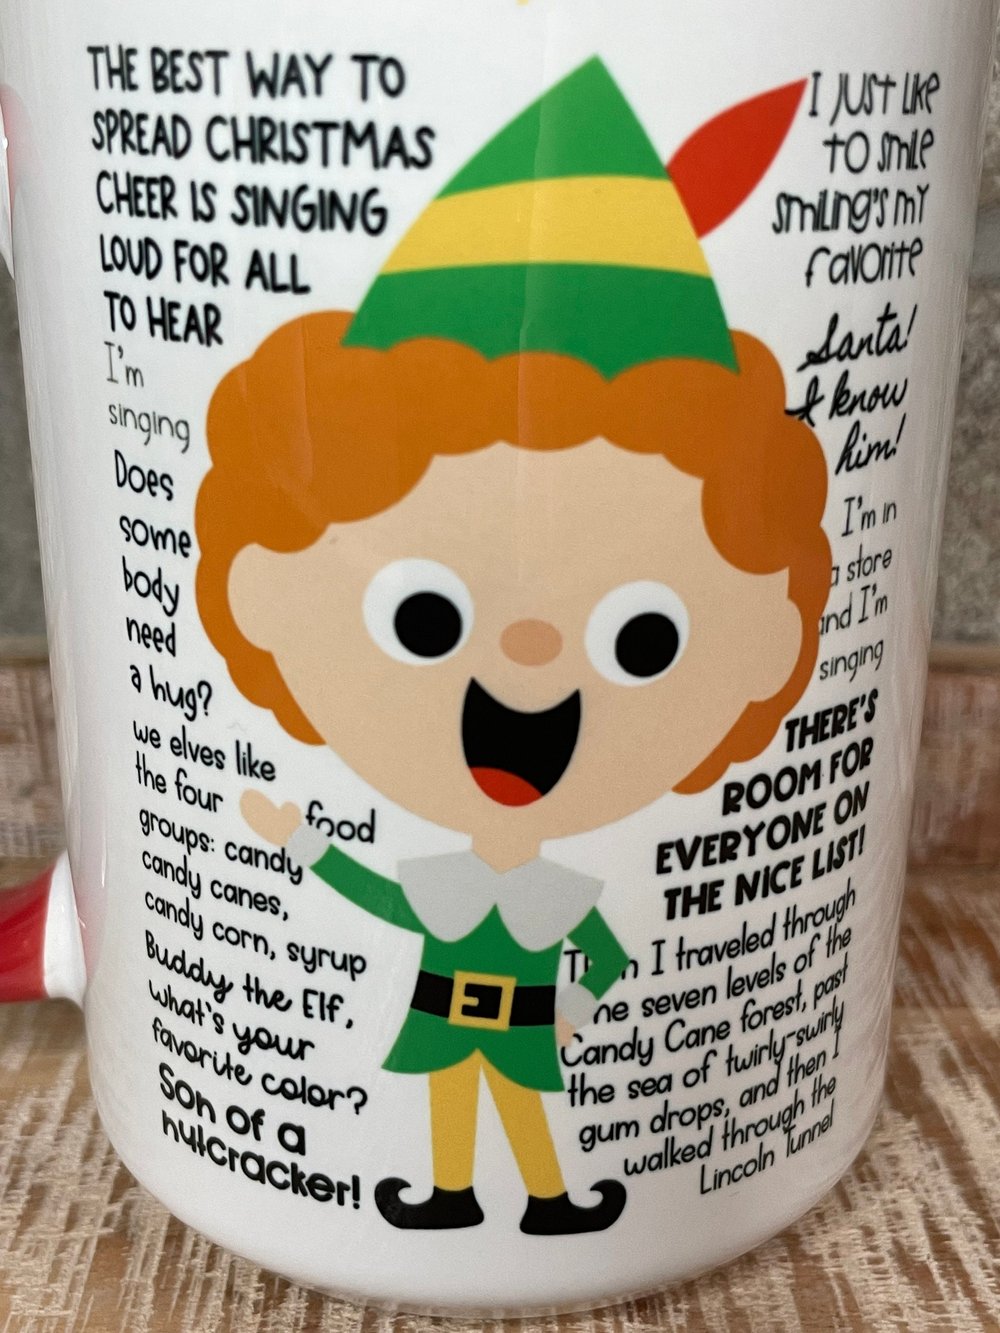 Buddy the Elf Santa, I know him! Tumbler Cup